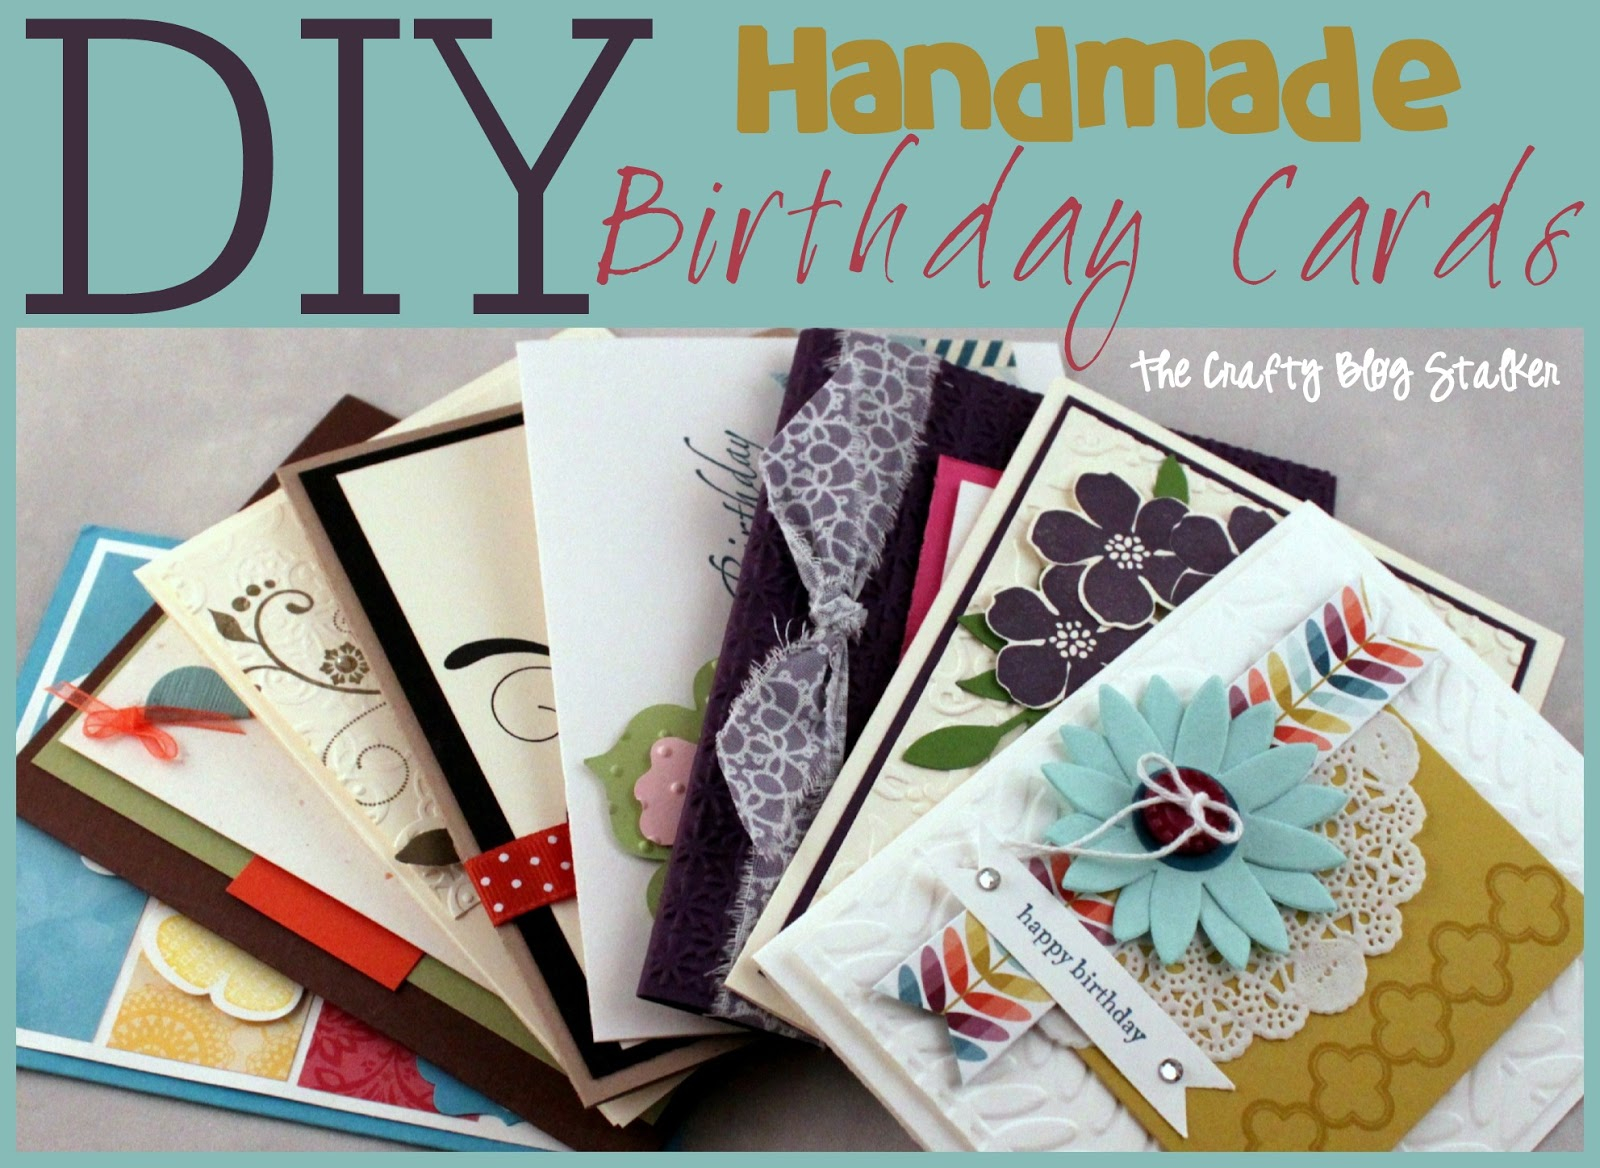 Ideas Of Making Birthday Cards Handmade Birthday Card Ideas The Crafty Blog Stalker